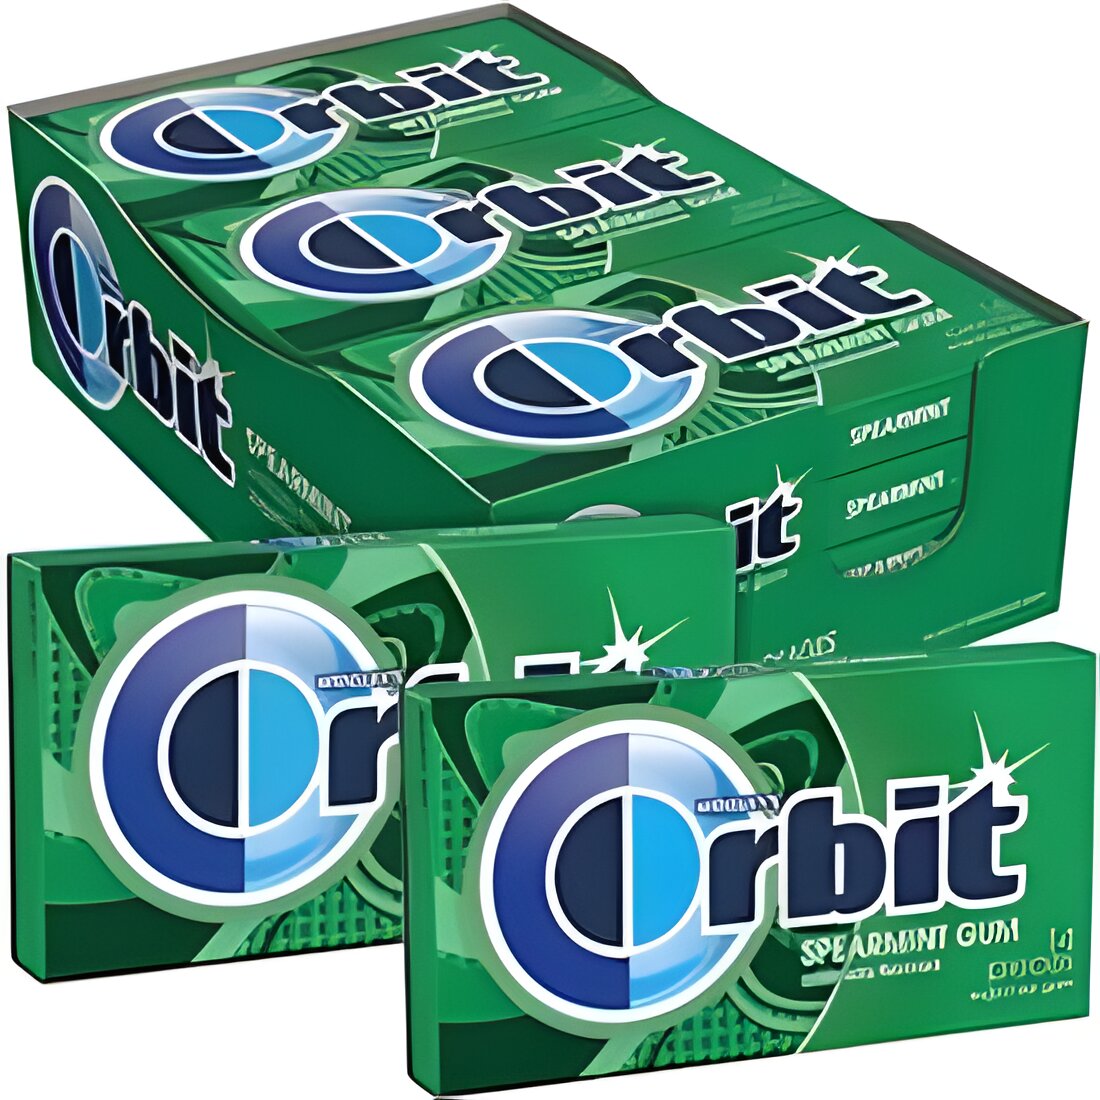 Free Orbit Spearmint Chewing Gum